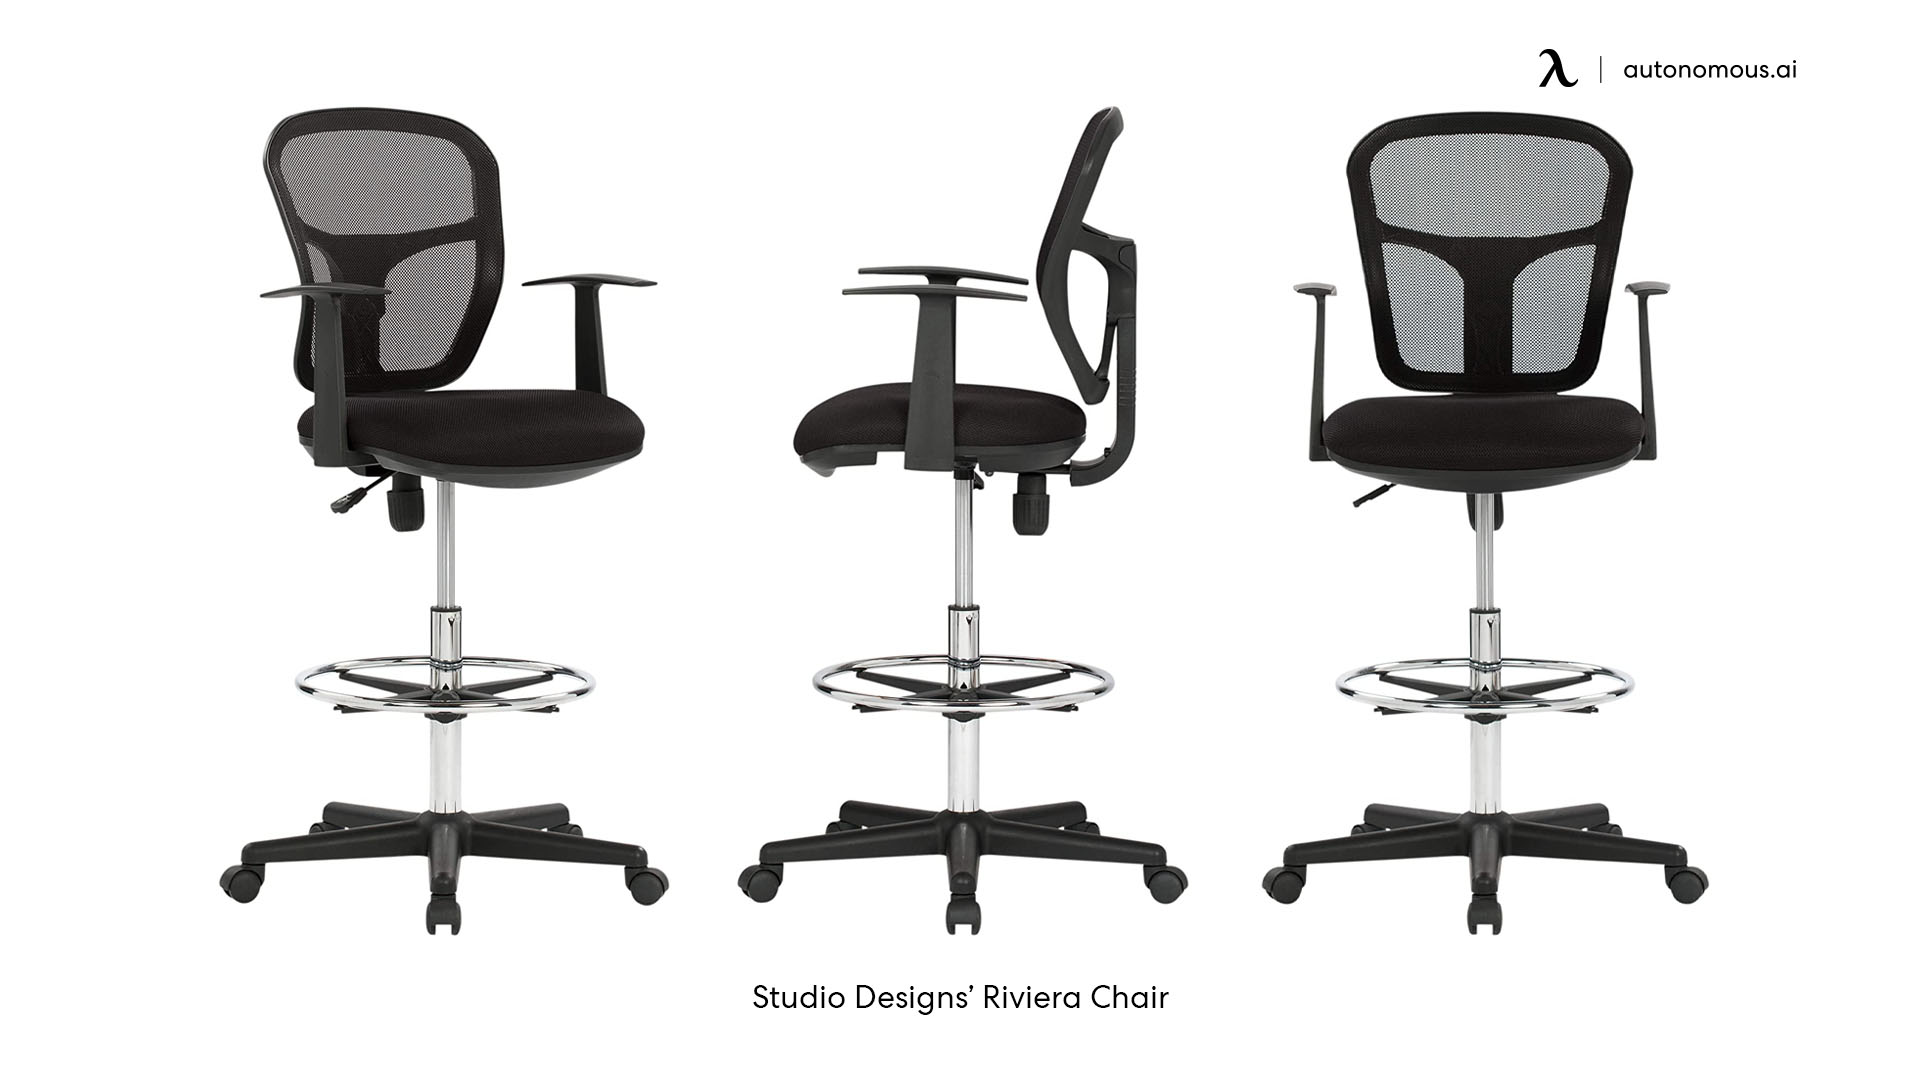 Studio Designs’ Riviera Drafting Swivel Chair